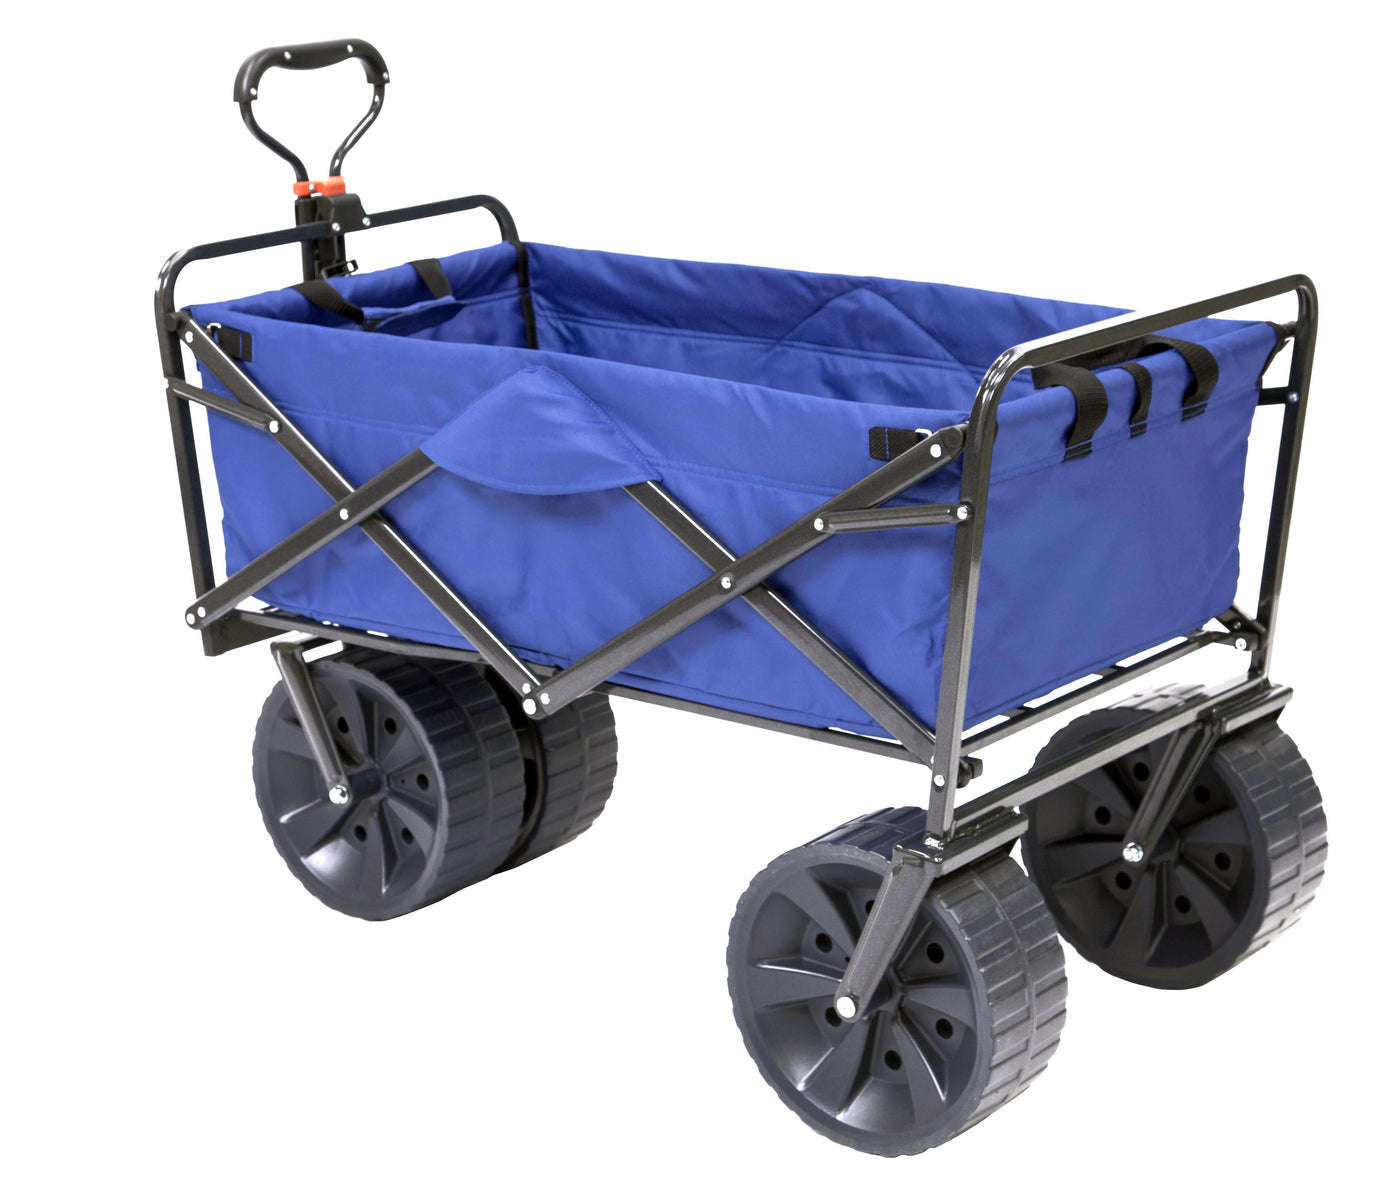 All-Terrain Beach Wagon by Mac Sports - Ultra durable with heavy duty wheels.